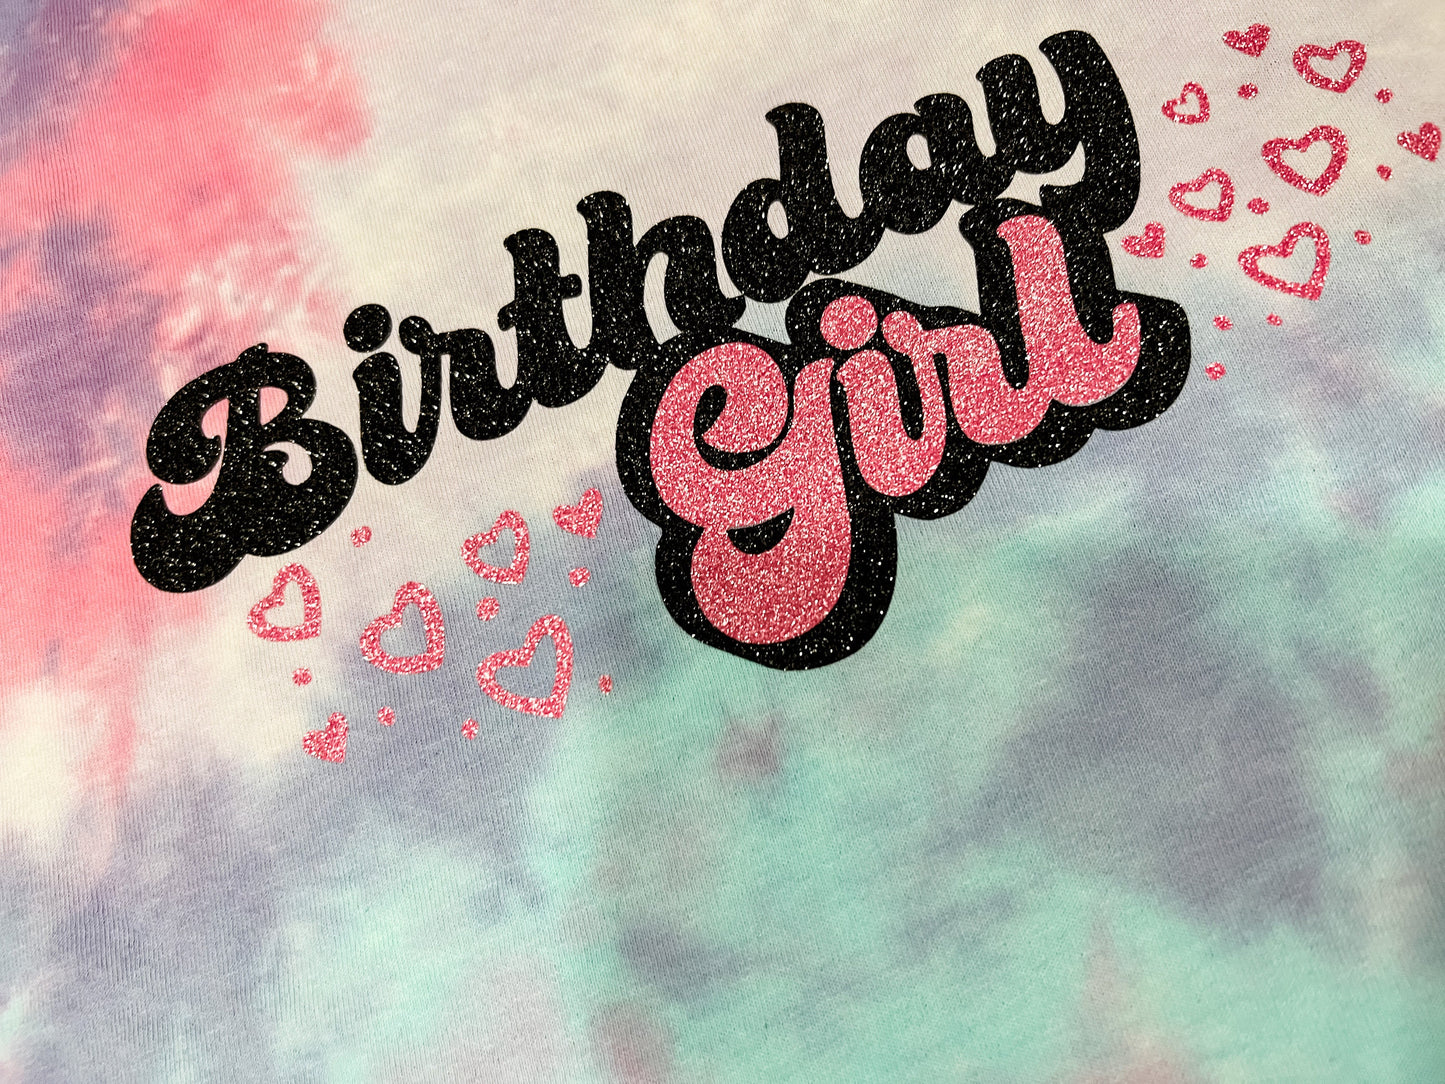 Birthday Girl Tie Dye Glitter Shirt